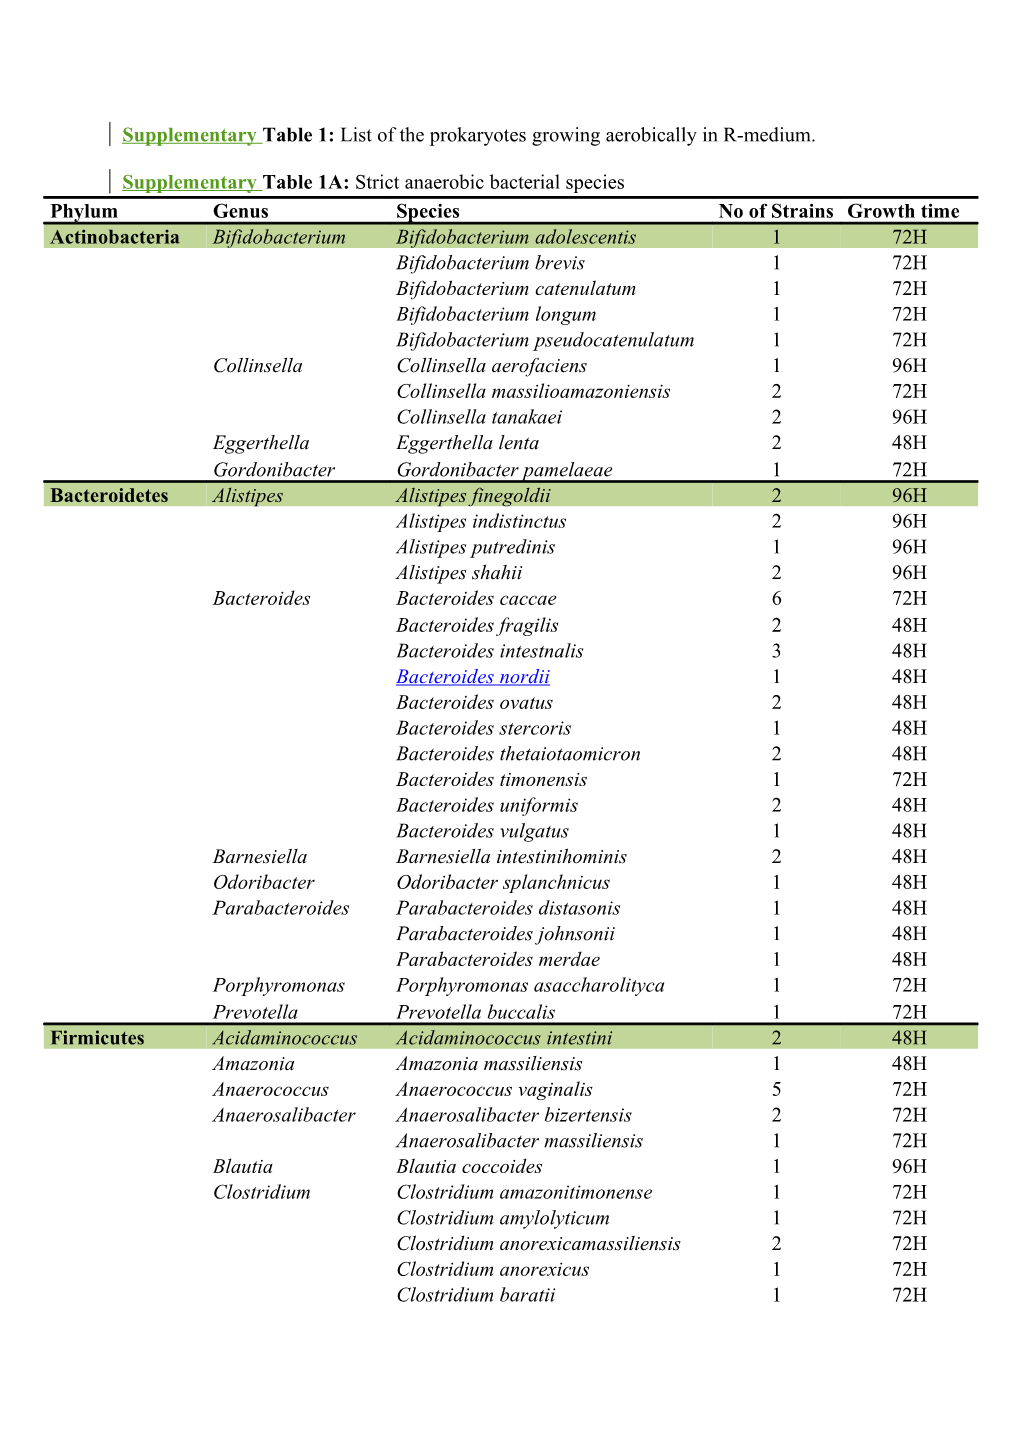 Supplementary Table 1: List of the Prokaryotes Growing Aerobically in R-Medium